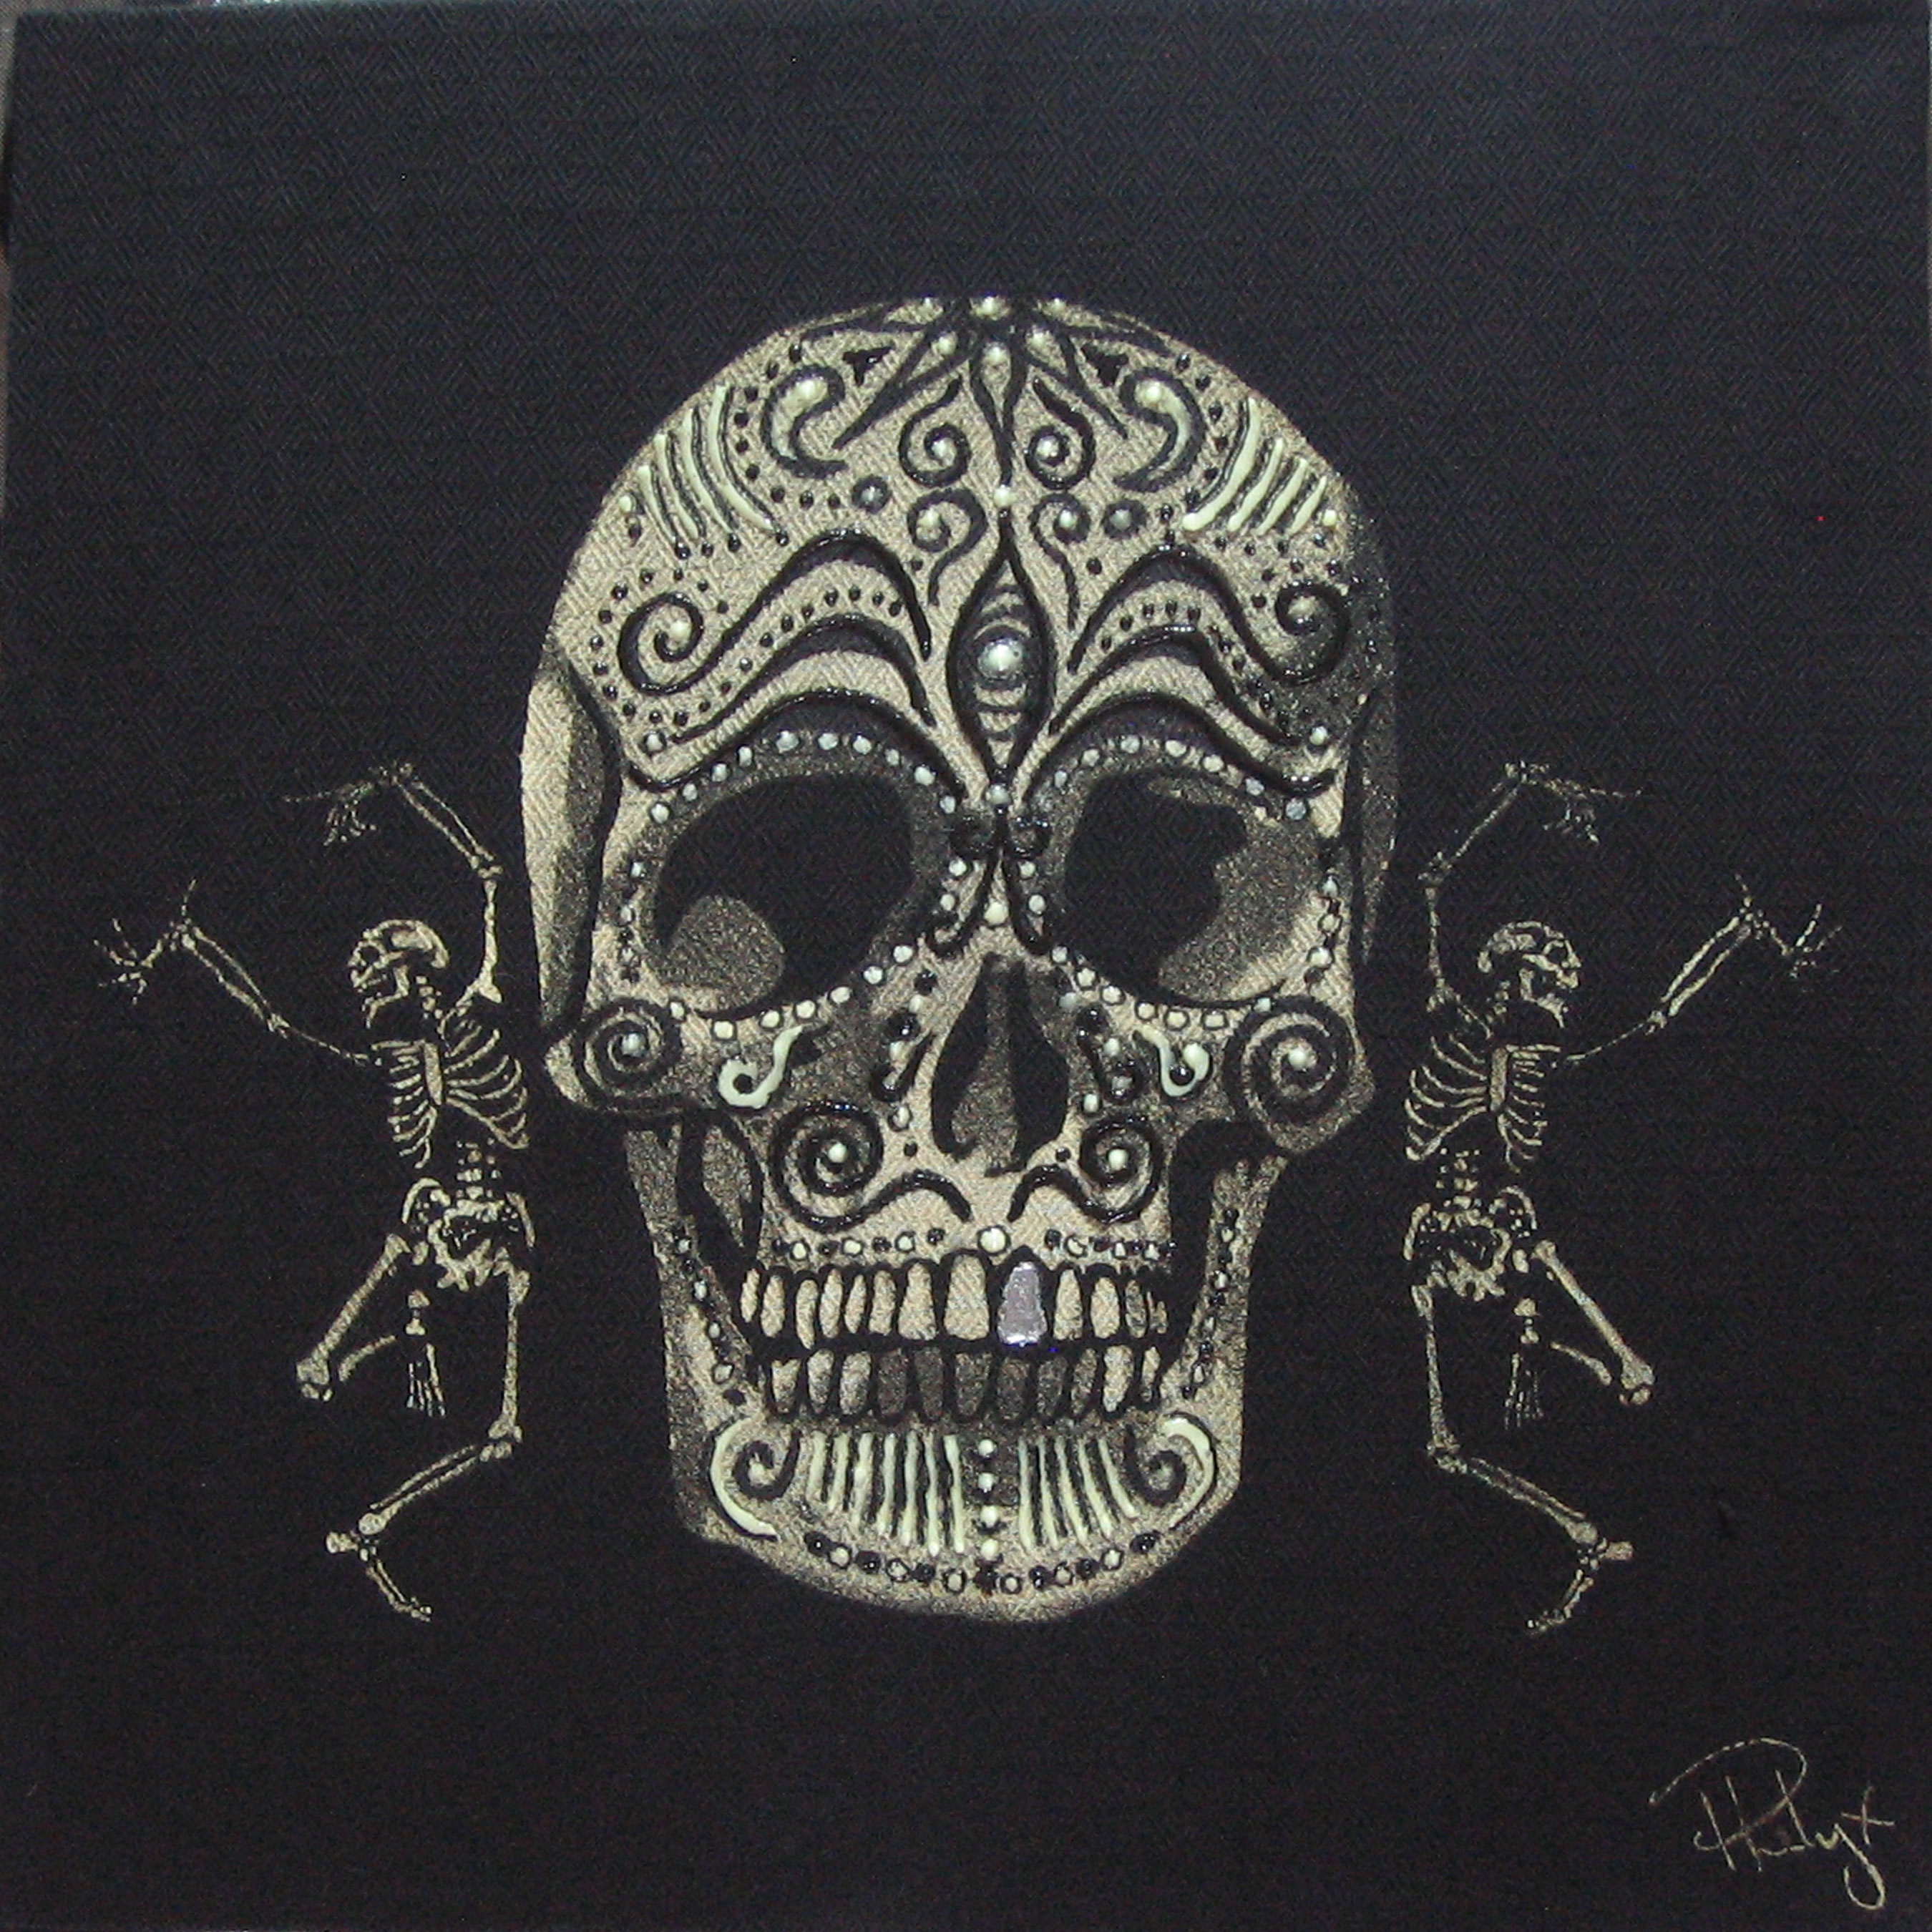 skulls, skeletons - desktop wallpaper